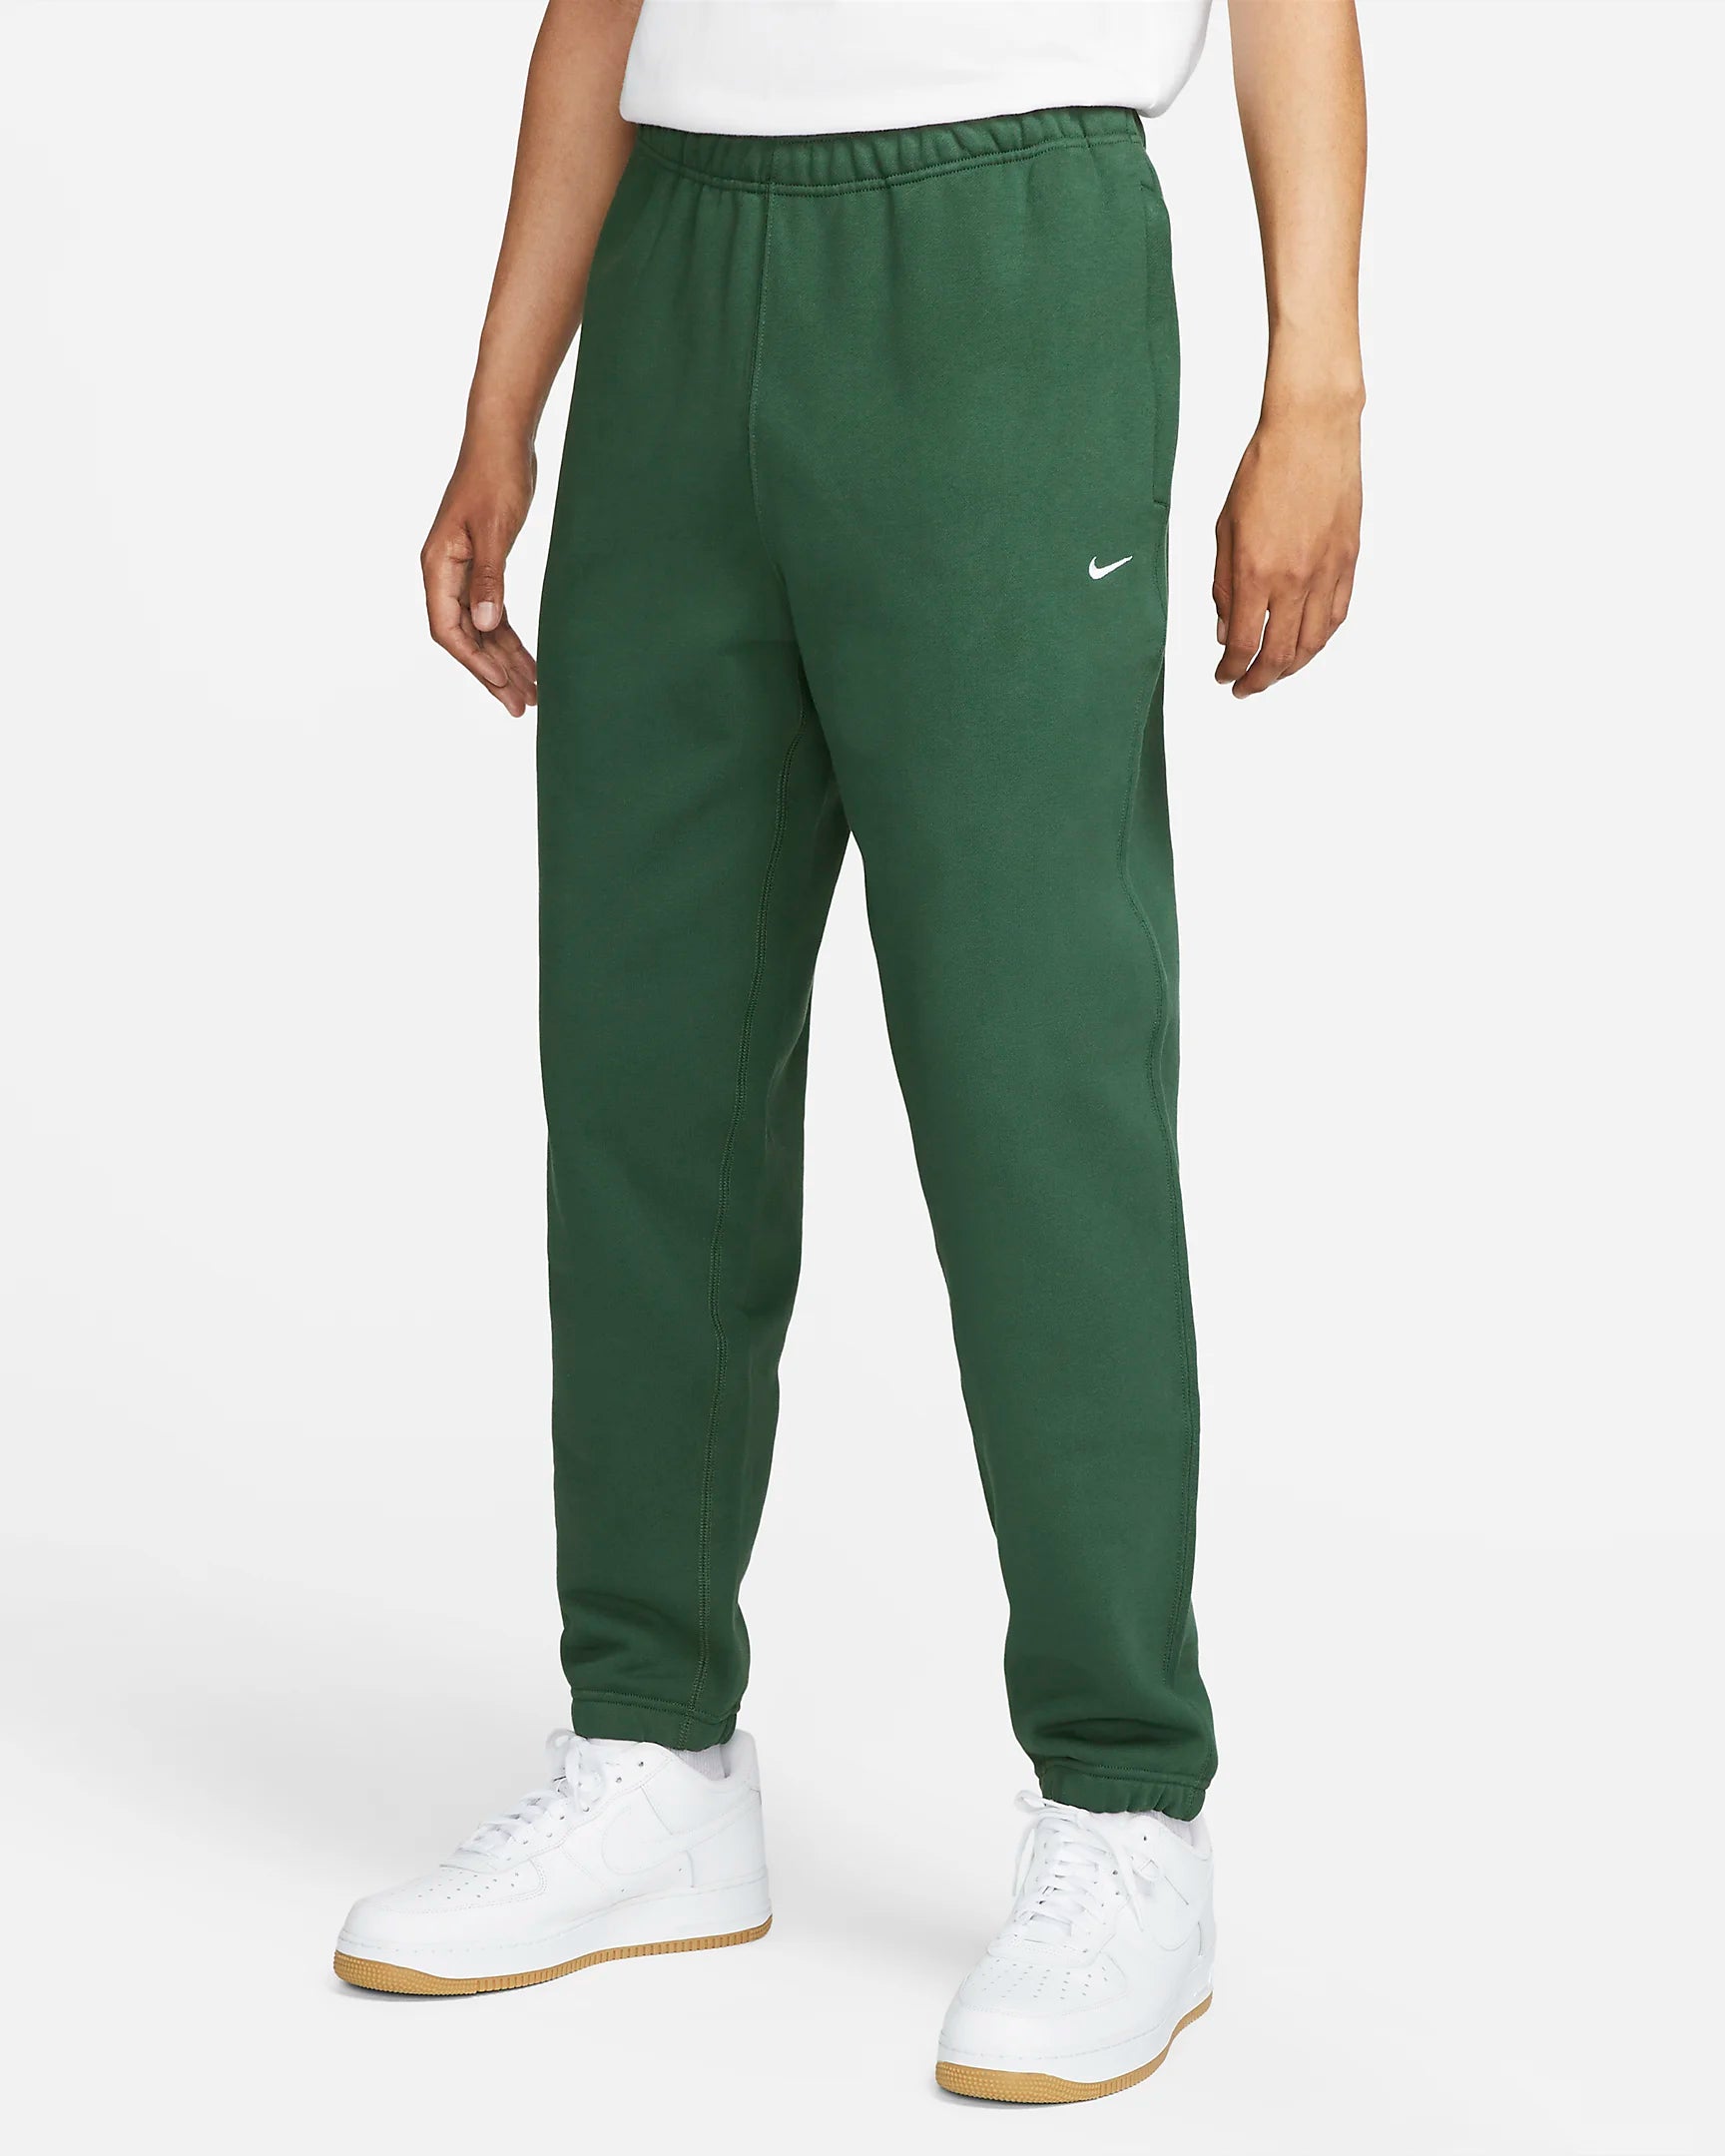 Nike Club fleece sweatpants in deep green